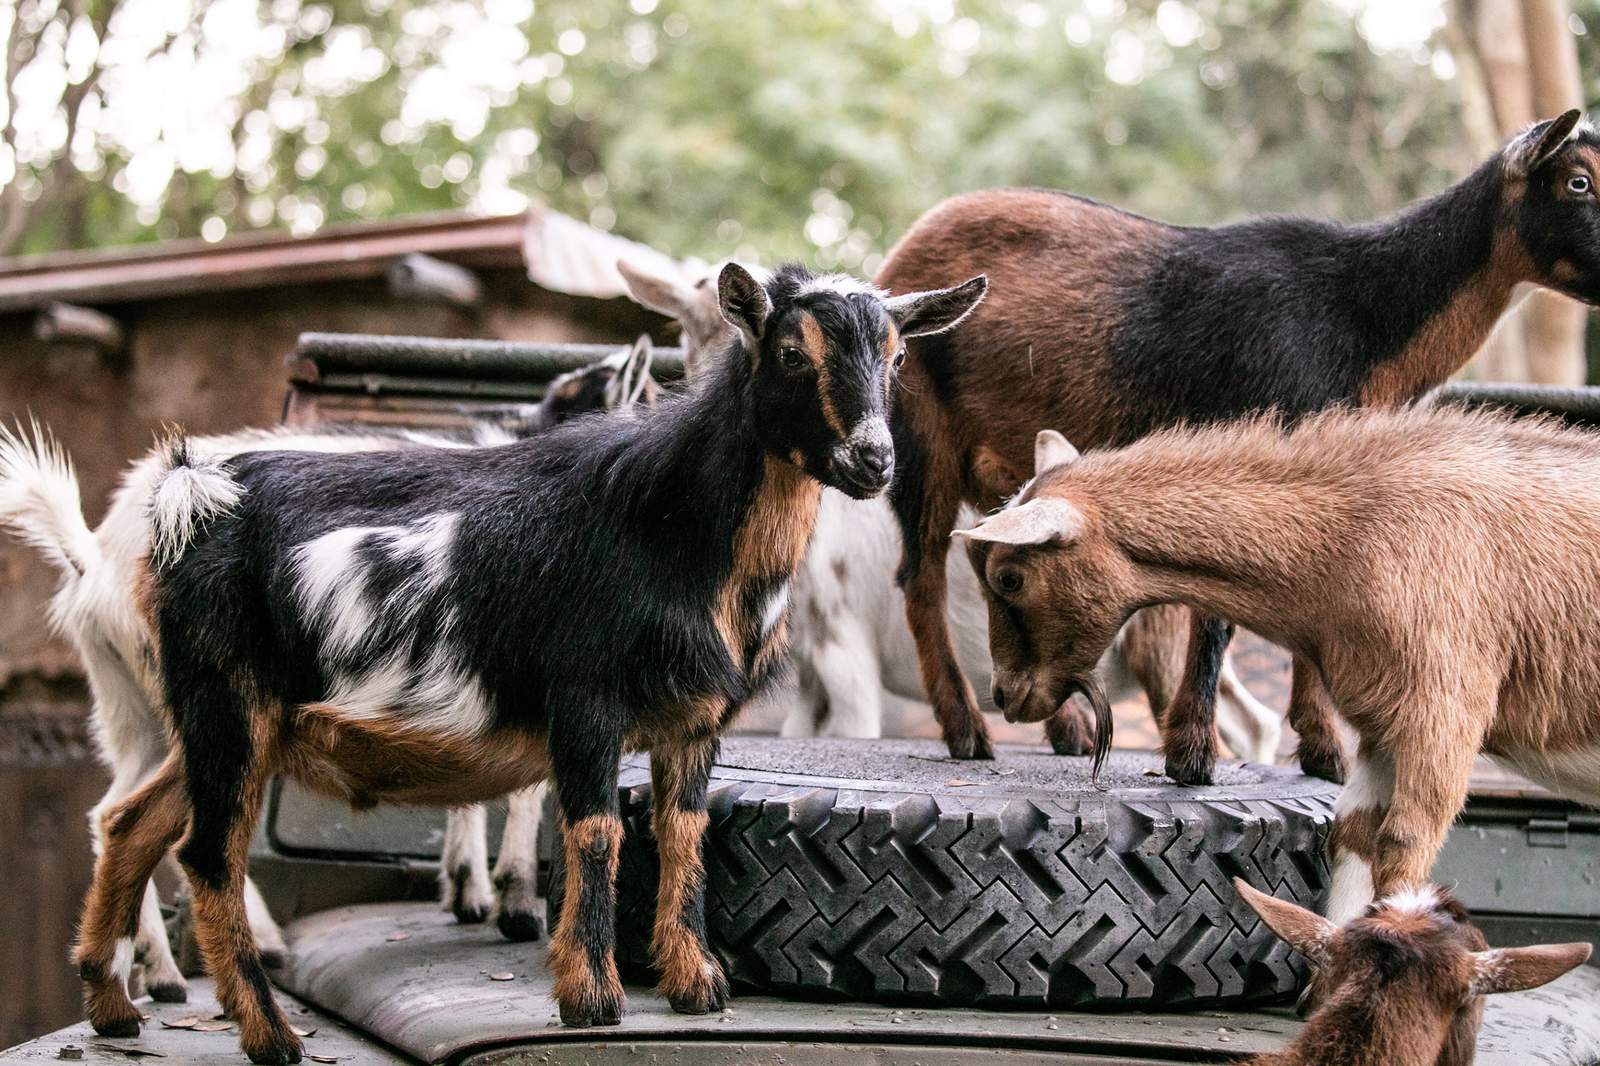 Nigerian dwarf goats take over warden outpost at Disney’s Animal Kingdom